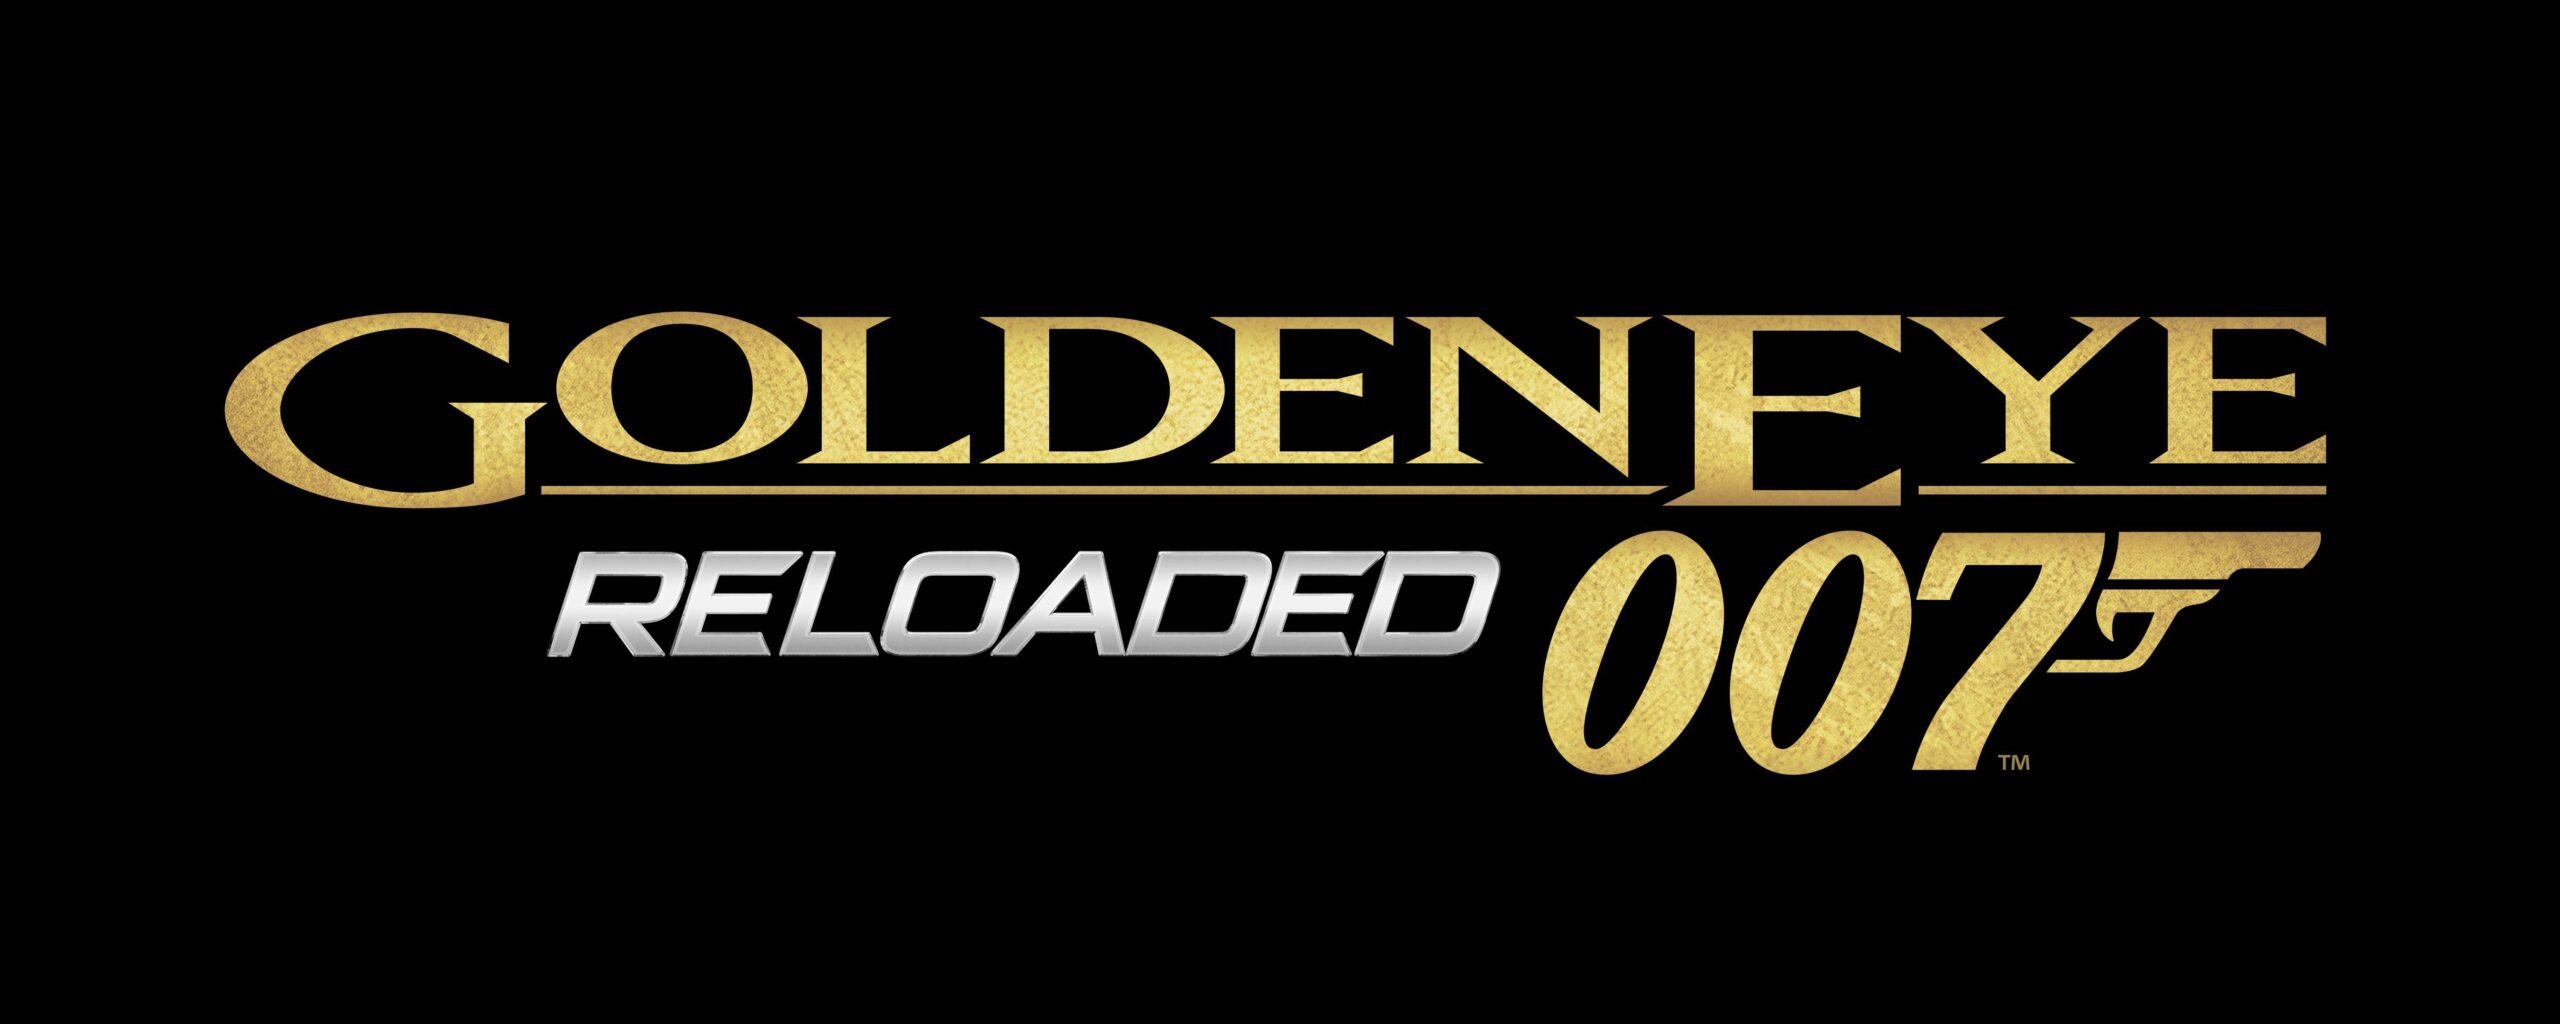 GoldenEye 007 Hd Full Wallpapers, GoldenEye 007, Game